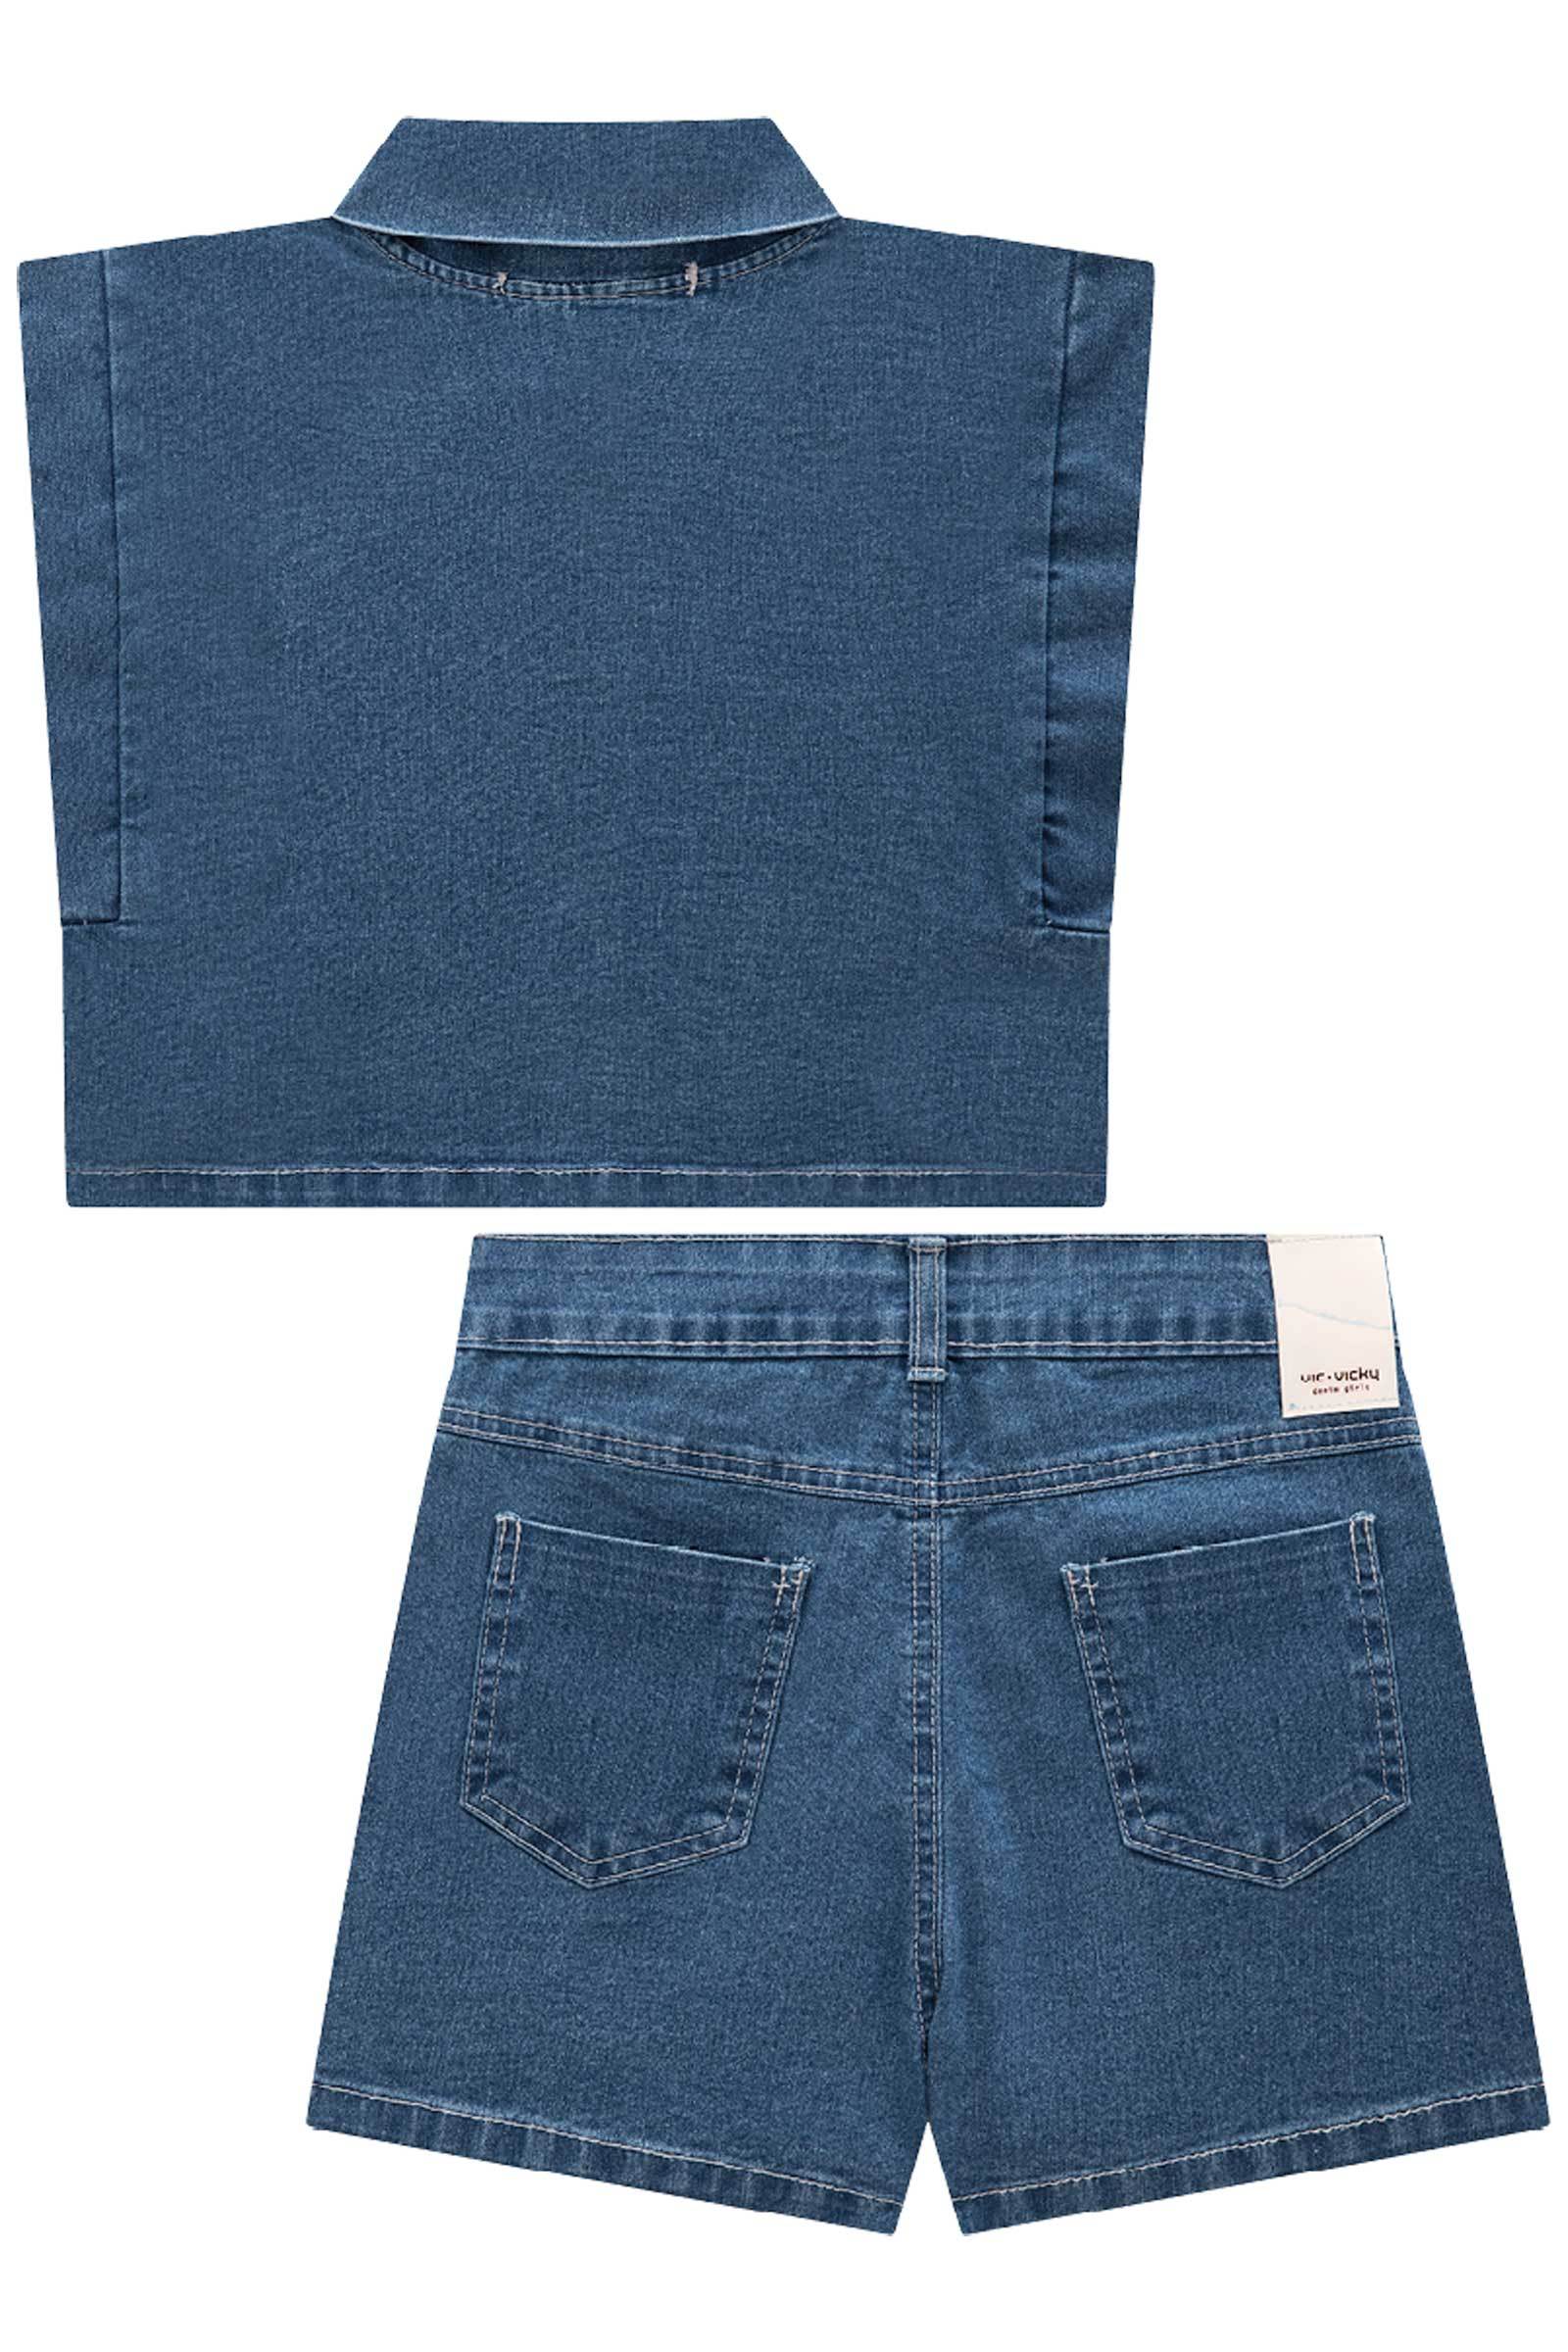 Conjunto de Camisa Cropped e Shorts em Jeans Belline 75273 Vic&Vicky